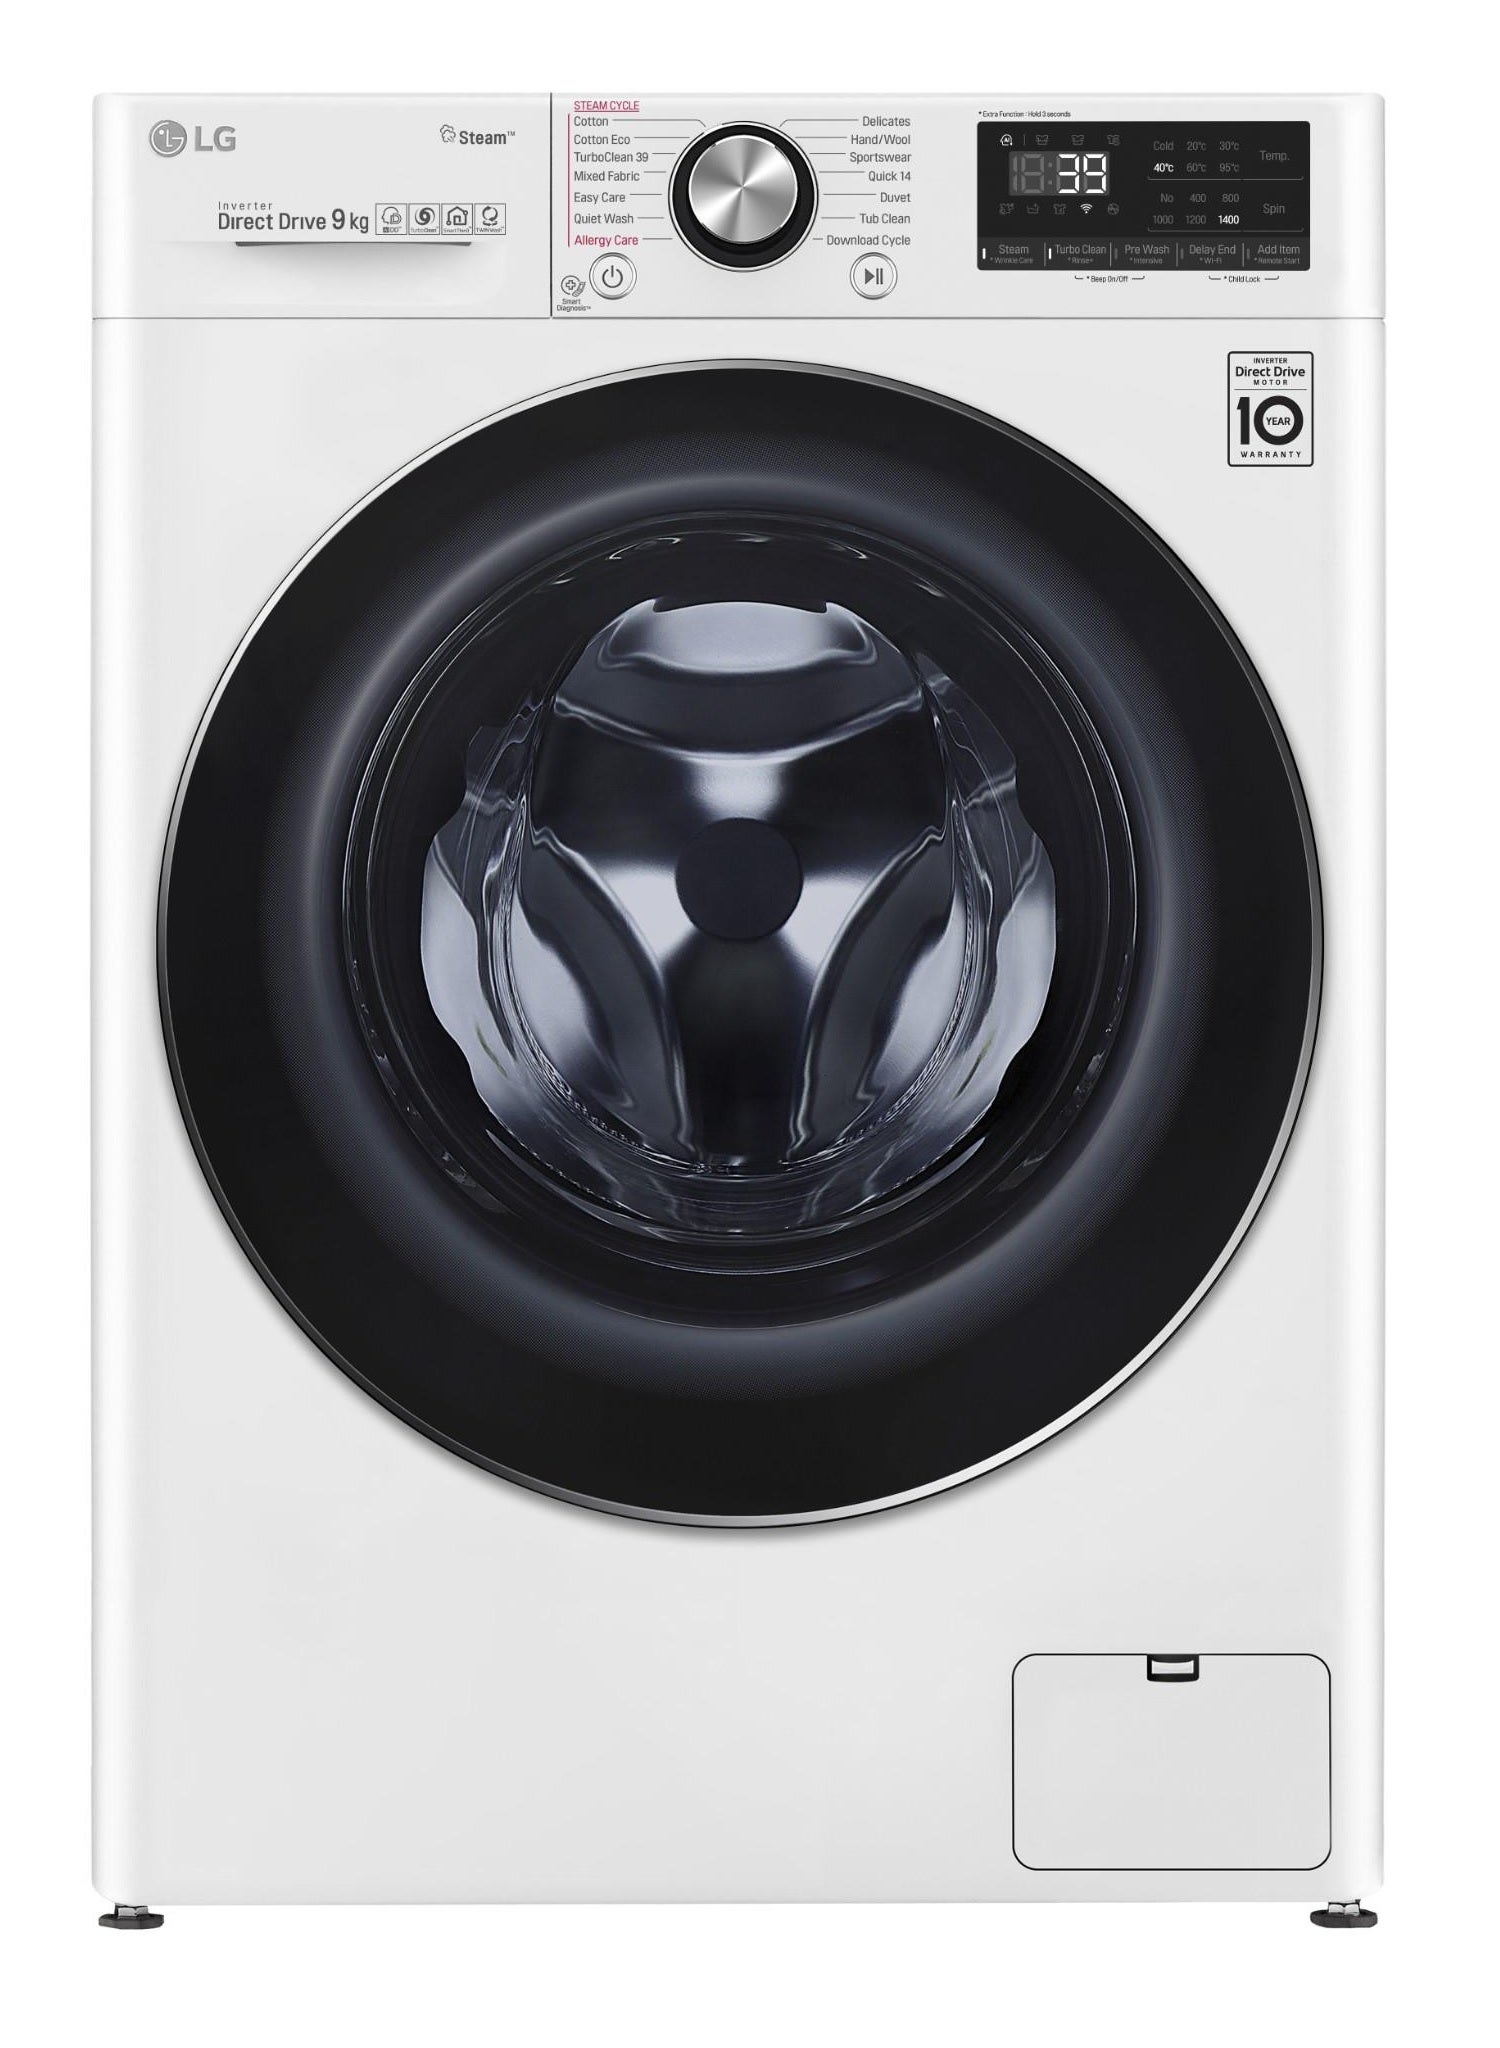 LG WV9-1409W Front Load Washing Machine